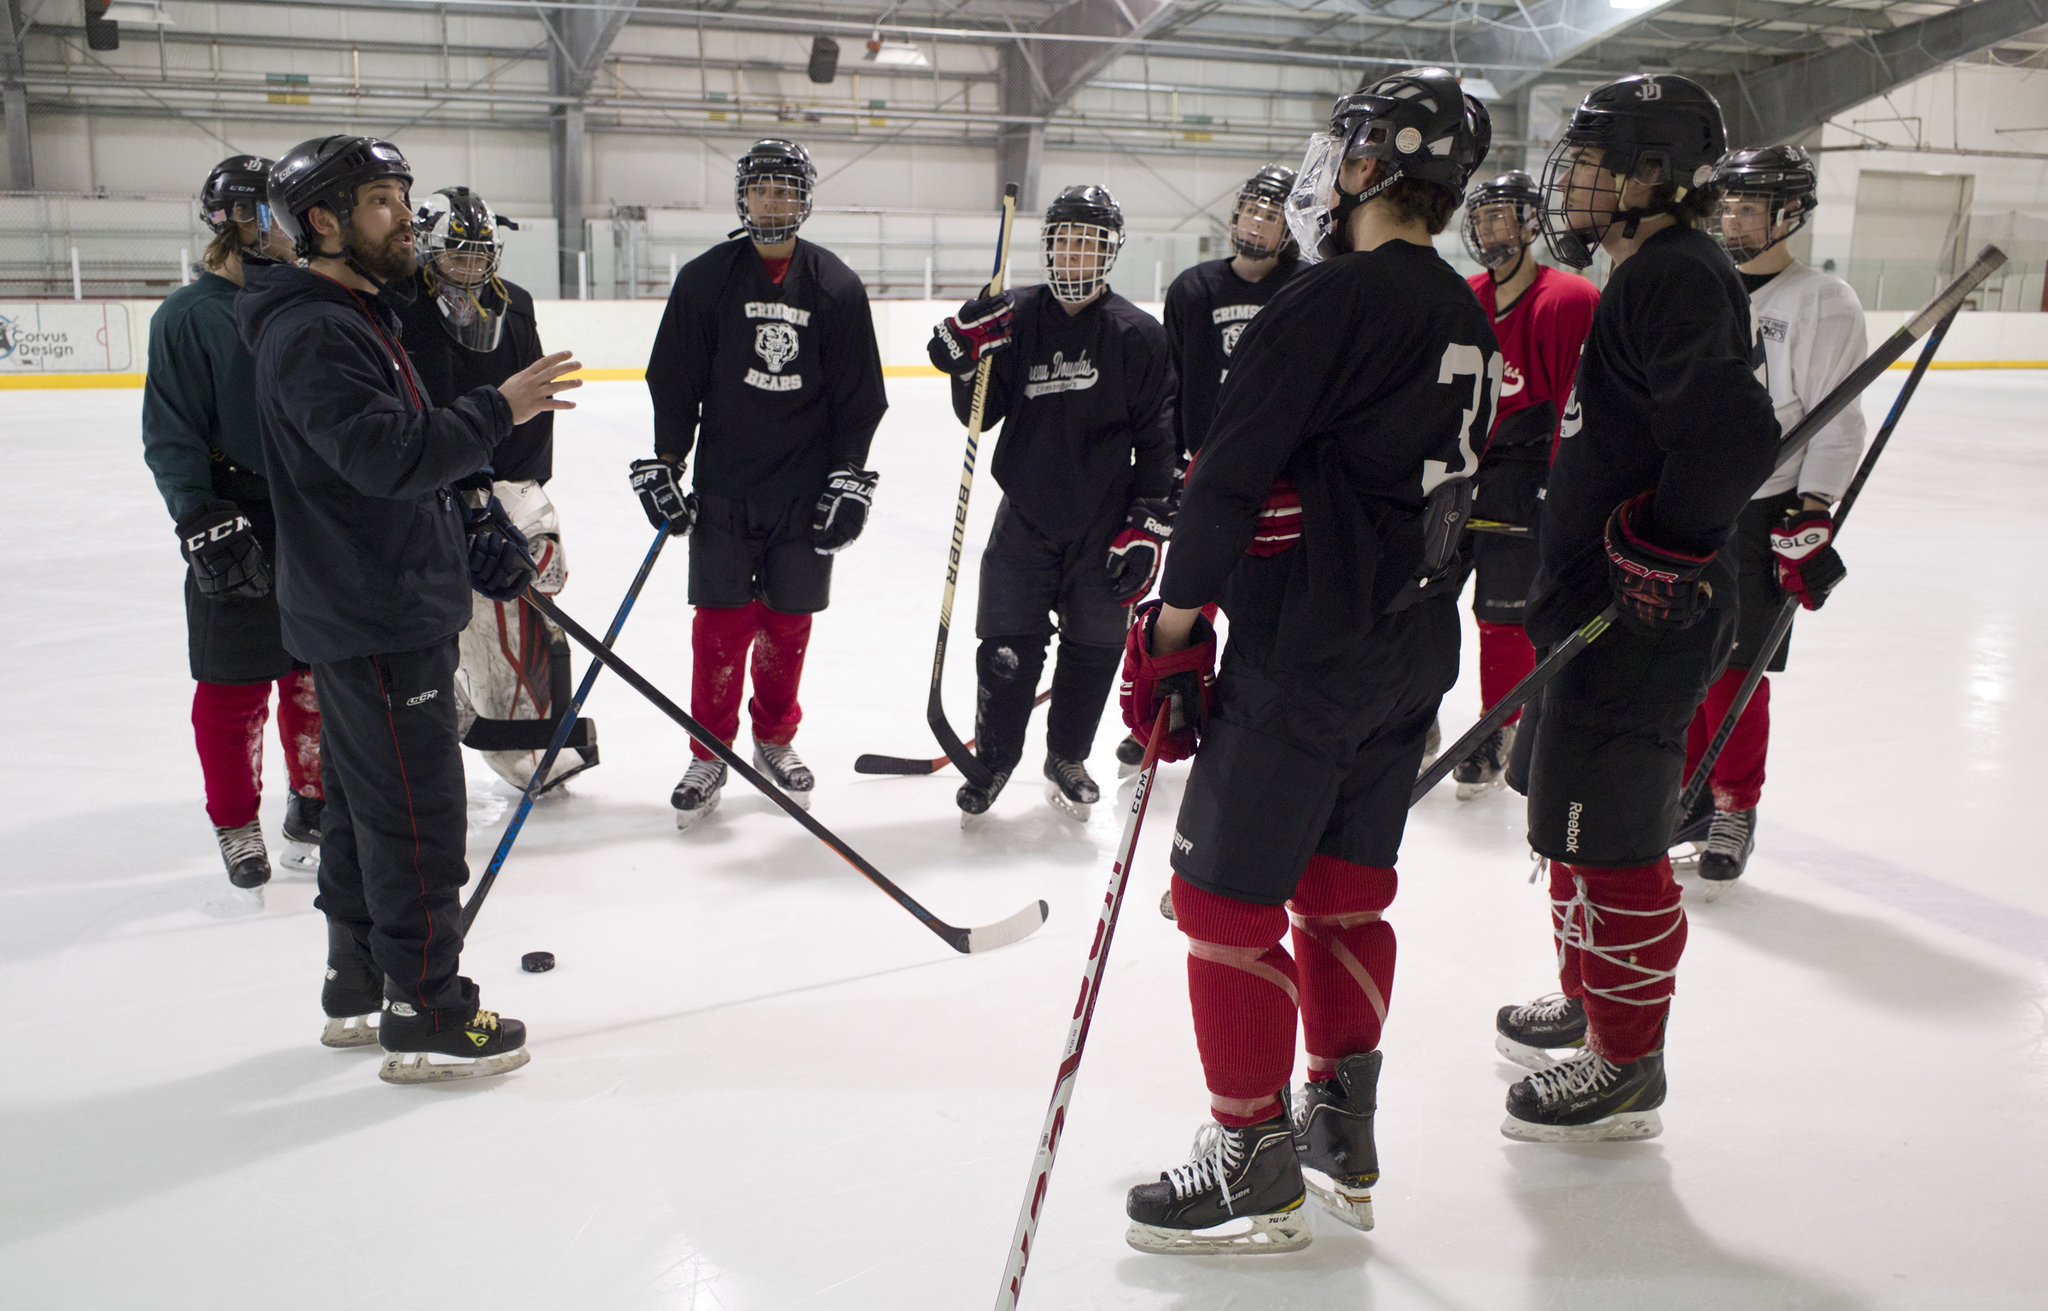 Juneau-Douglas High School hockey coach Luke Adams, left, speaks to players during a team practice at Treadwell Arena on Wednesday, Feb. 1. (Michael Penn | Juneau Empire File)